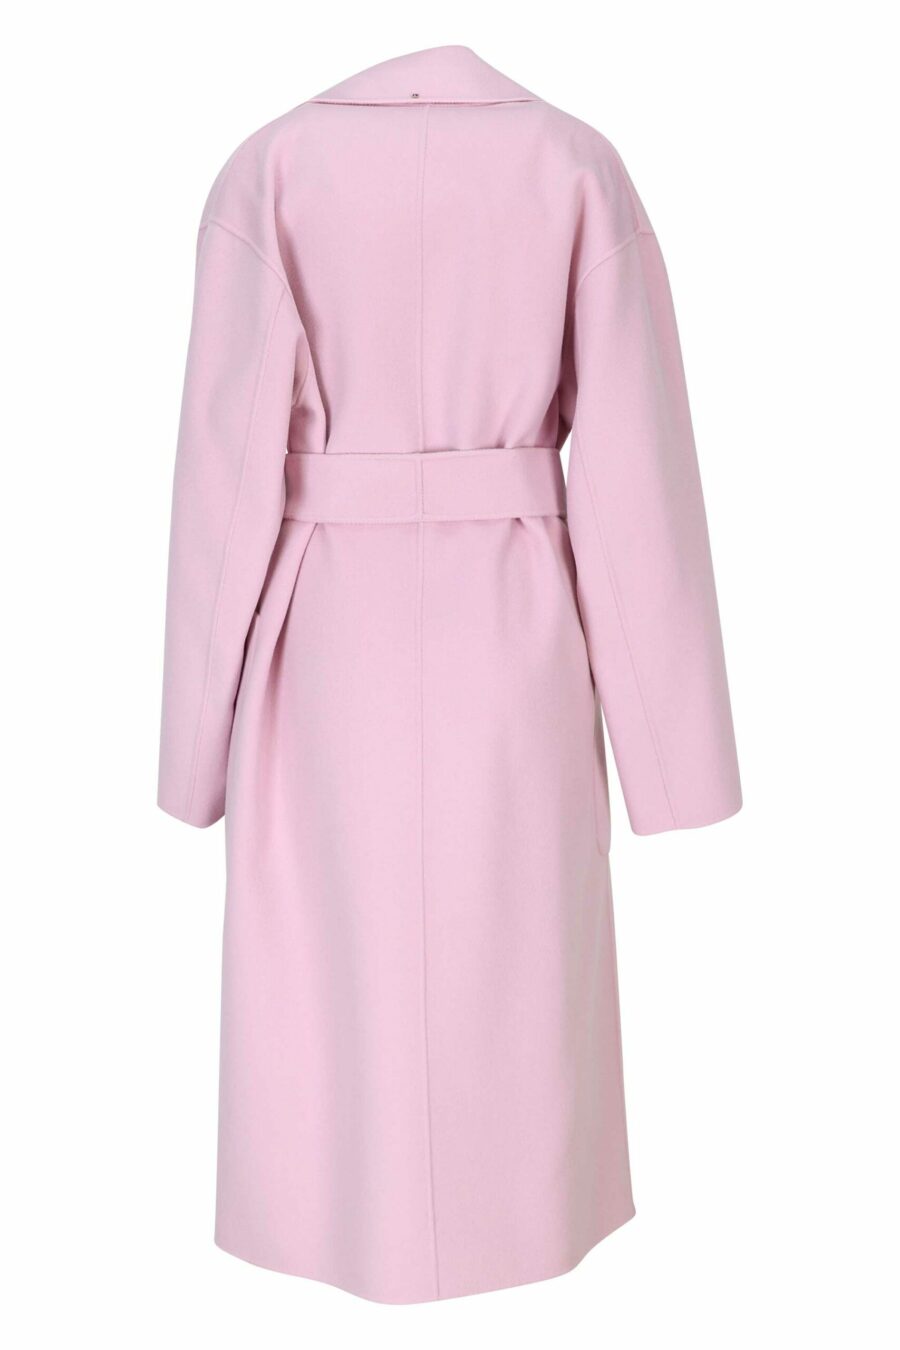 Abrigo rosa largo de lana con bolsillos - 20110241060802 2 scaled